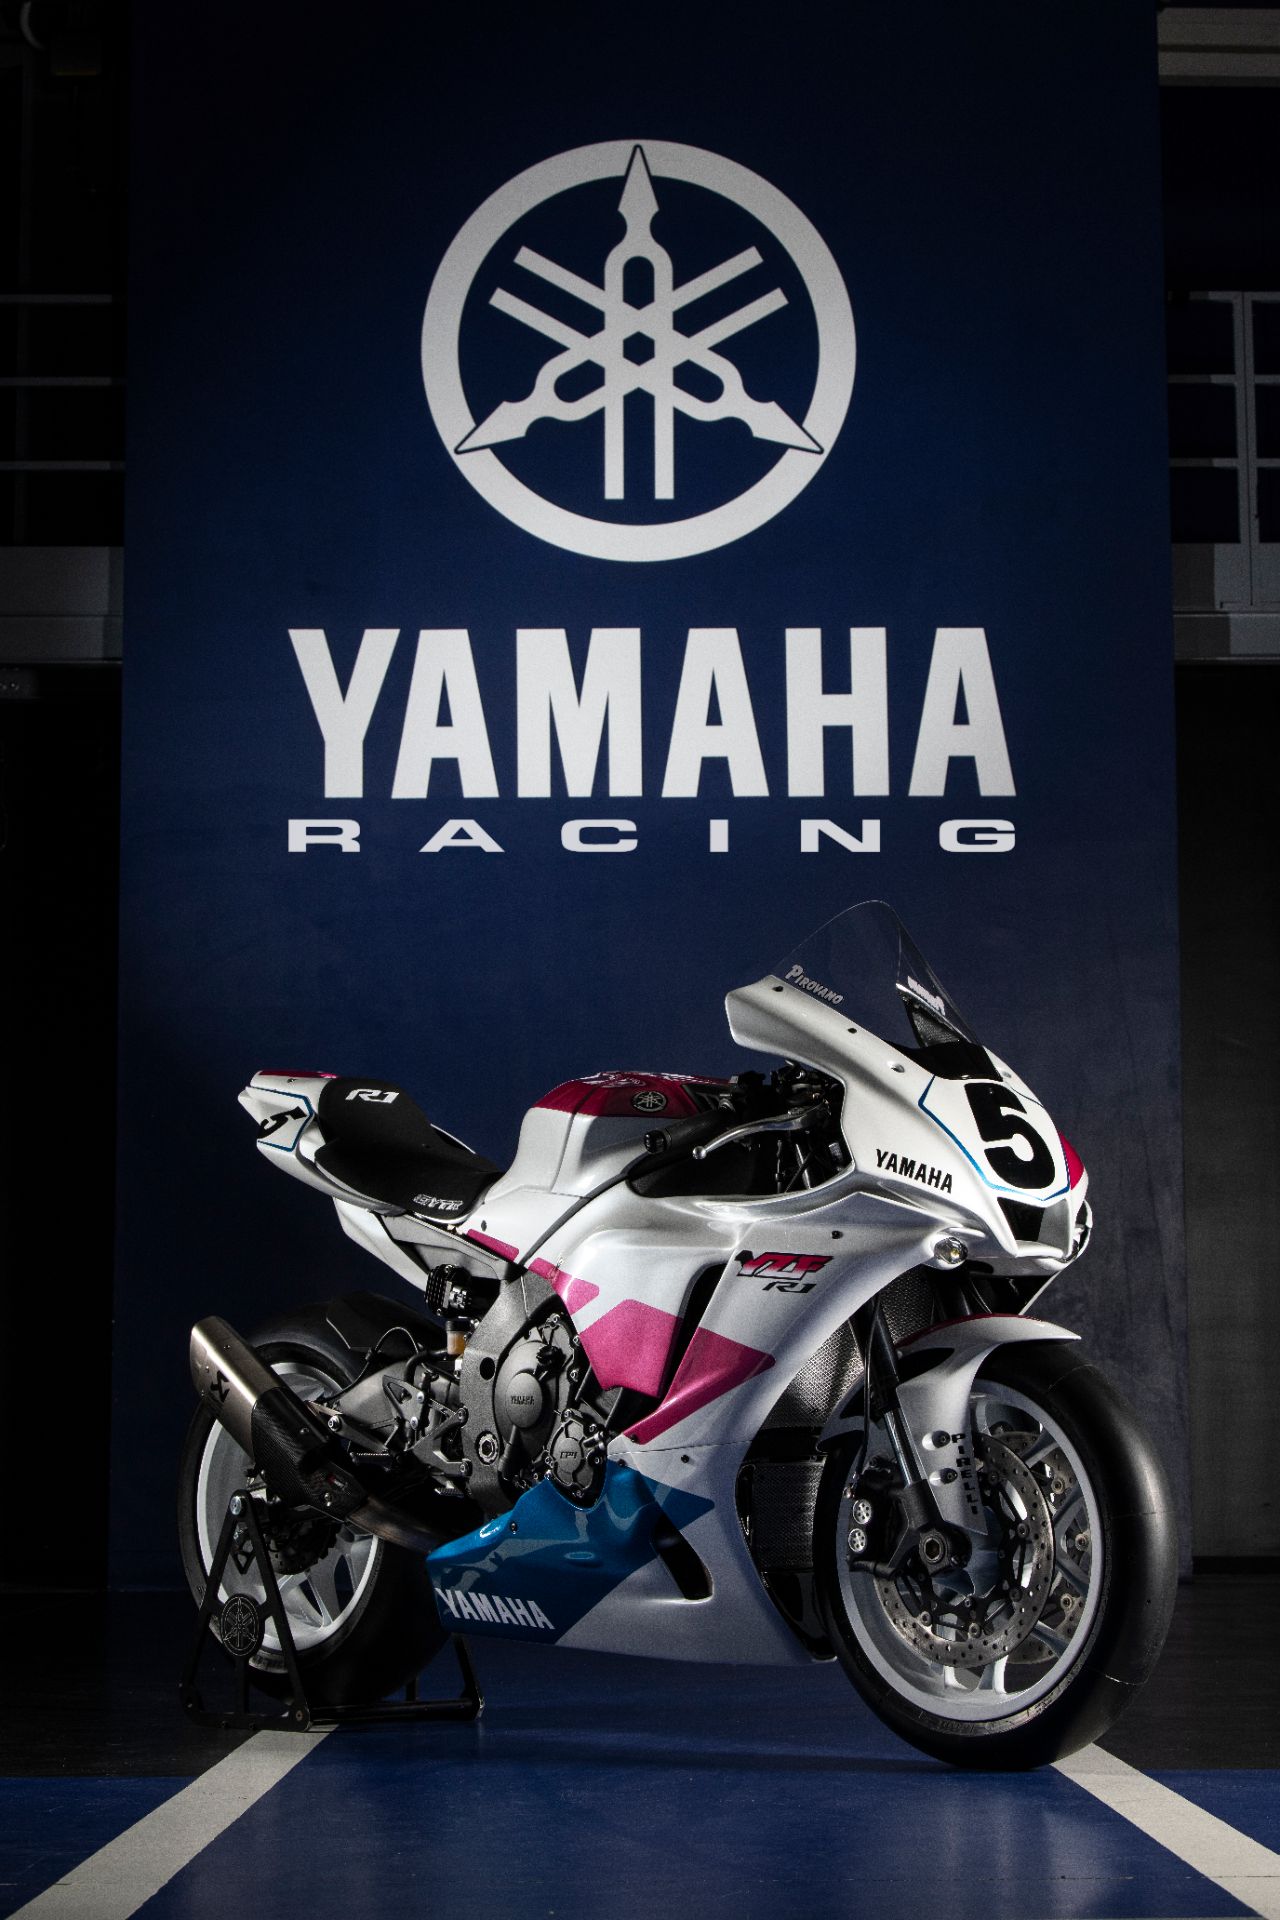 Yamaha To Pay Tribute Fabrizio Pirovano With Parade Lap In Estoril